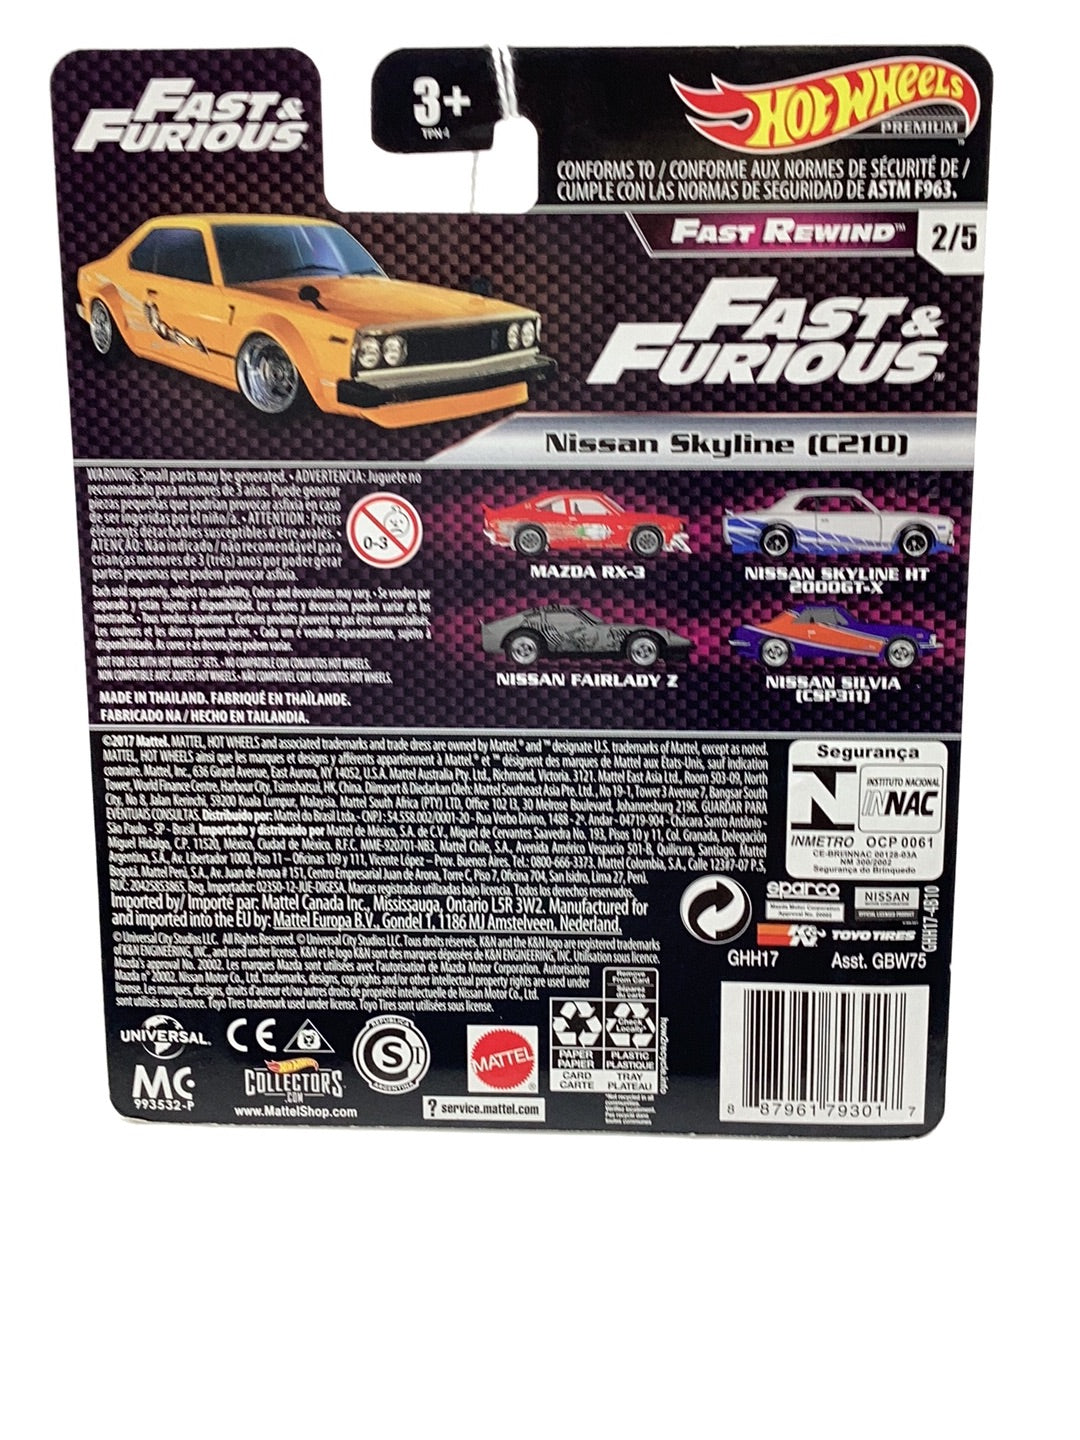 Hot wheels fast and furious Fast Rewind #2 Nissan Skyline C210 246N